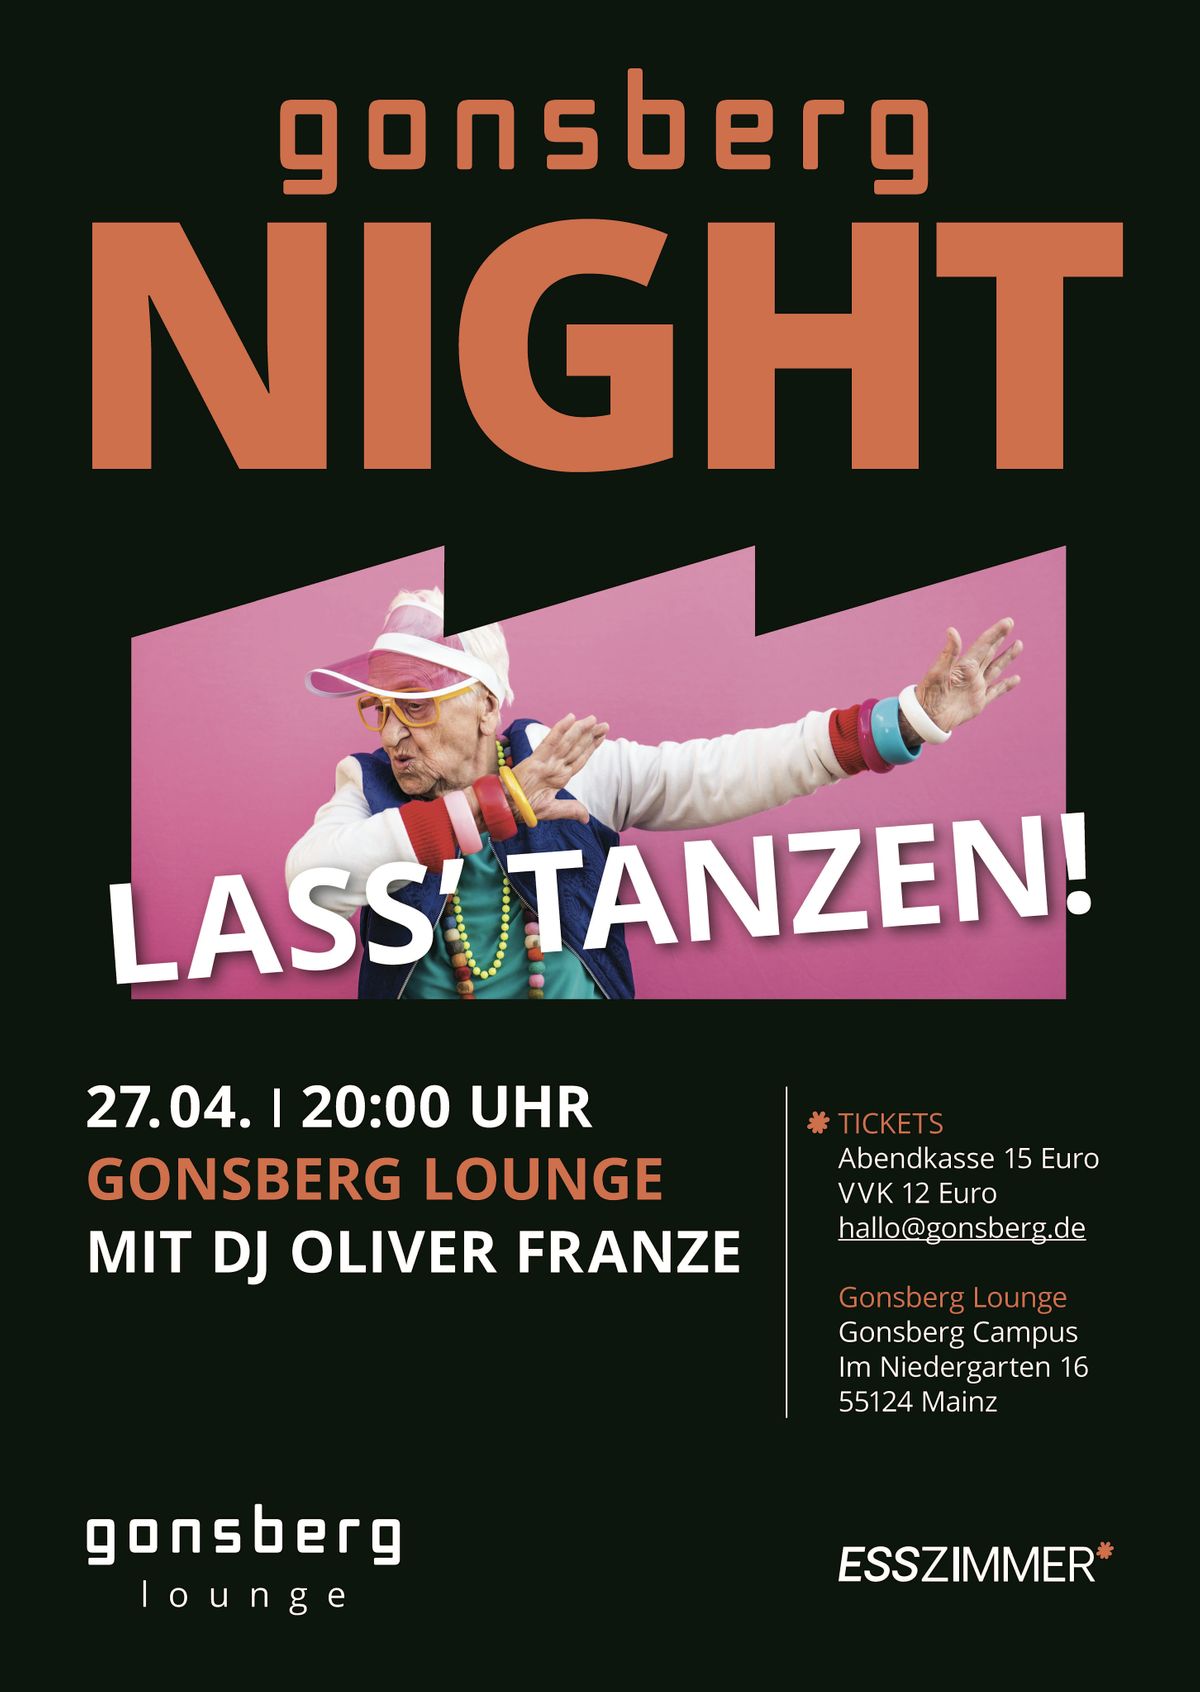 Gonsberg Night              "Lass' Tanzen!"